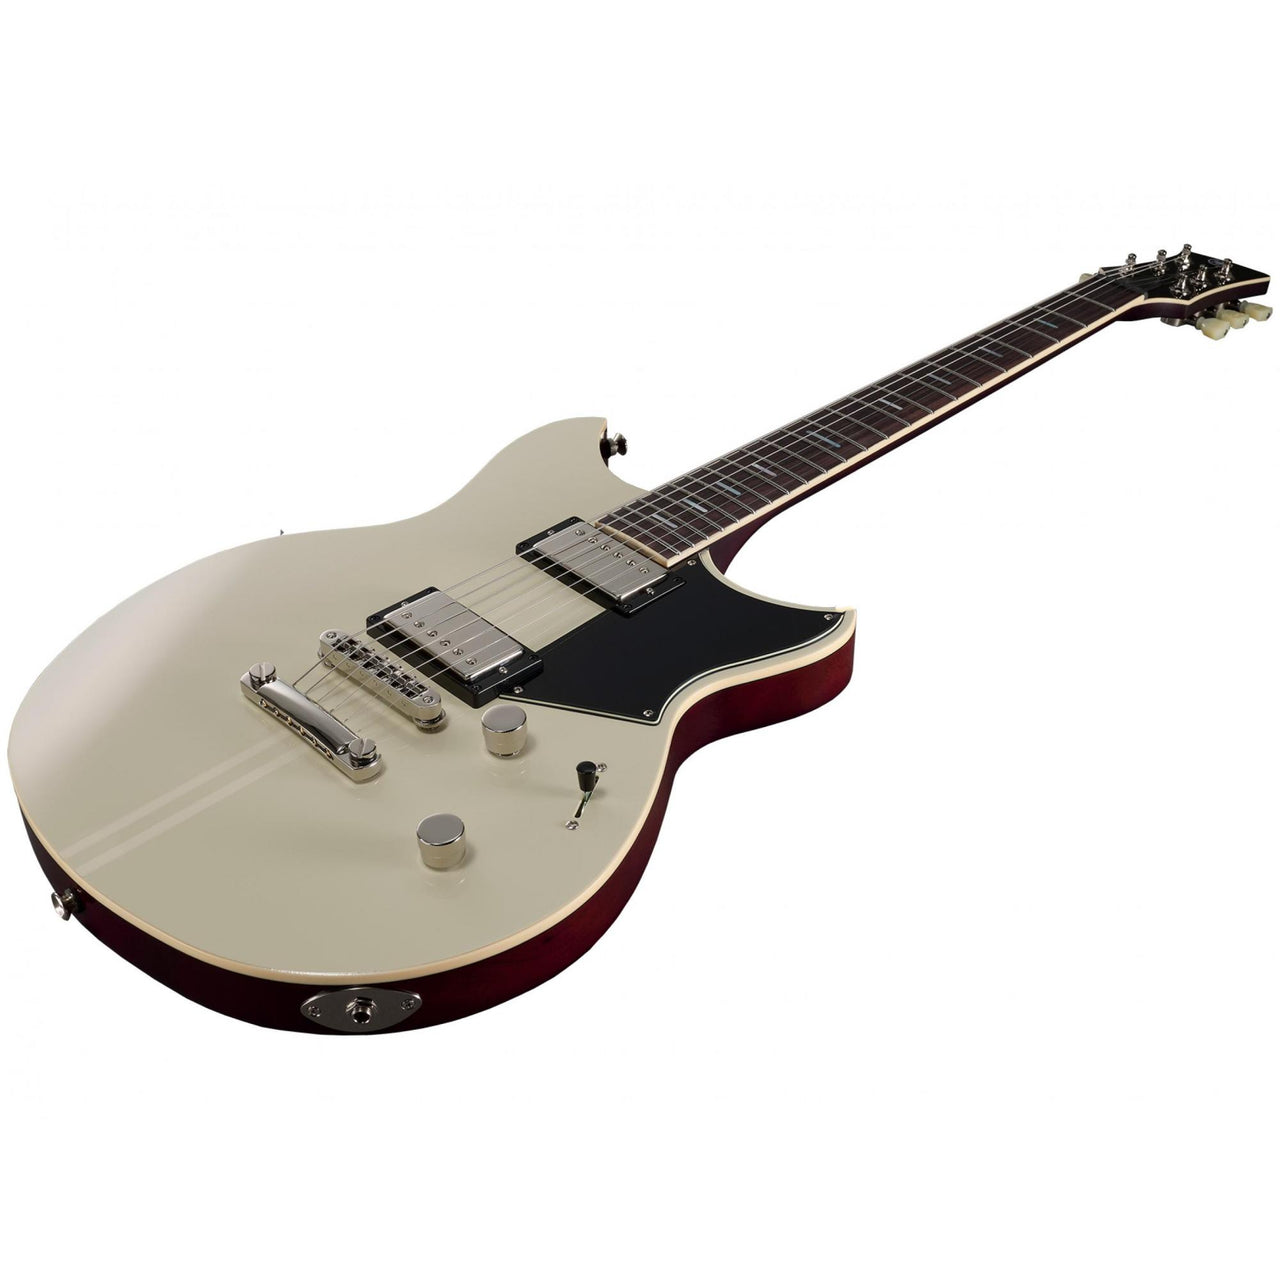 Guitarra Electrica Yamaha Revstar Standard Vintage White, Rss20vw